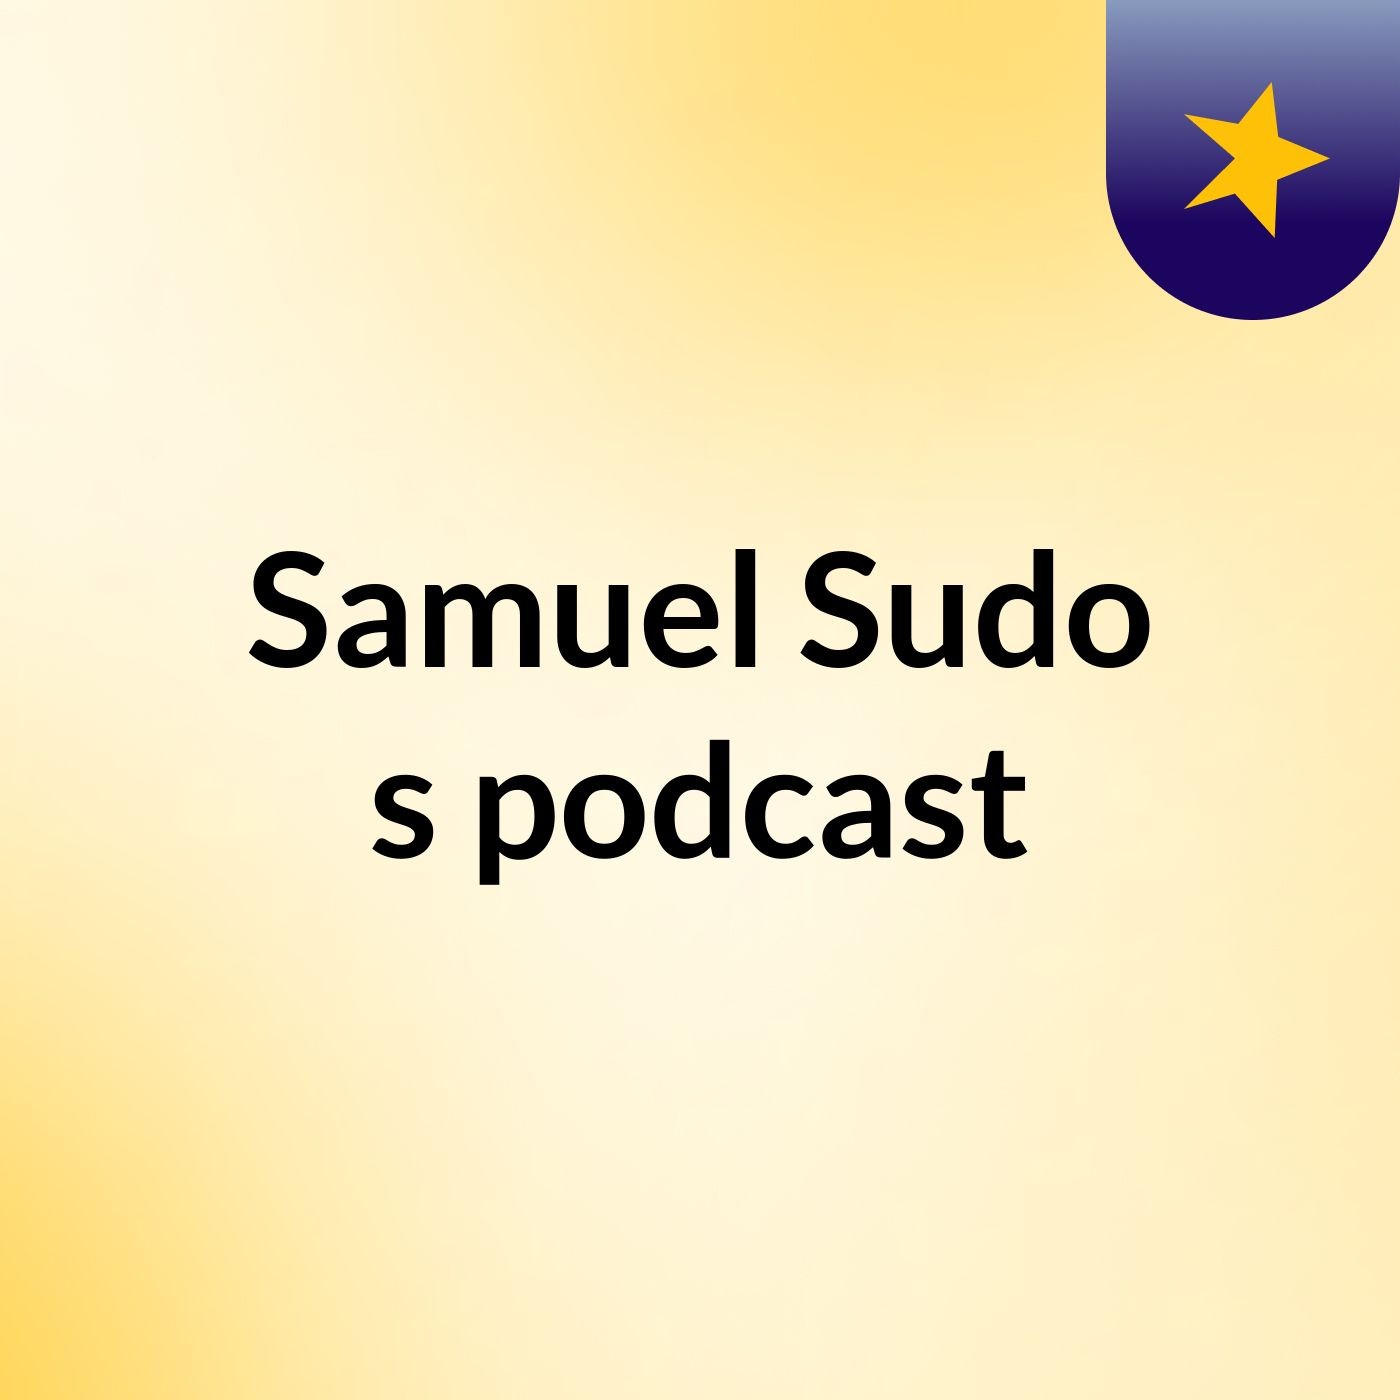 Samuel Sudo's podcast